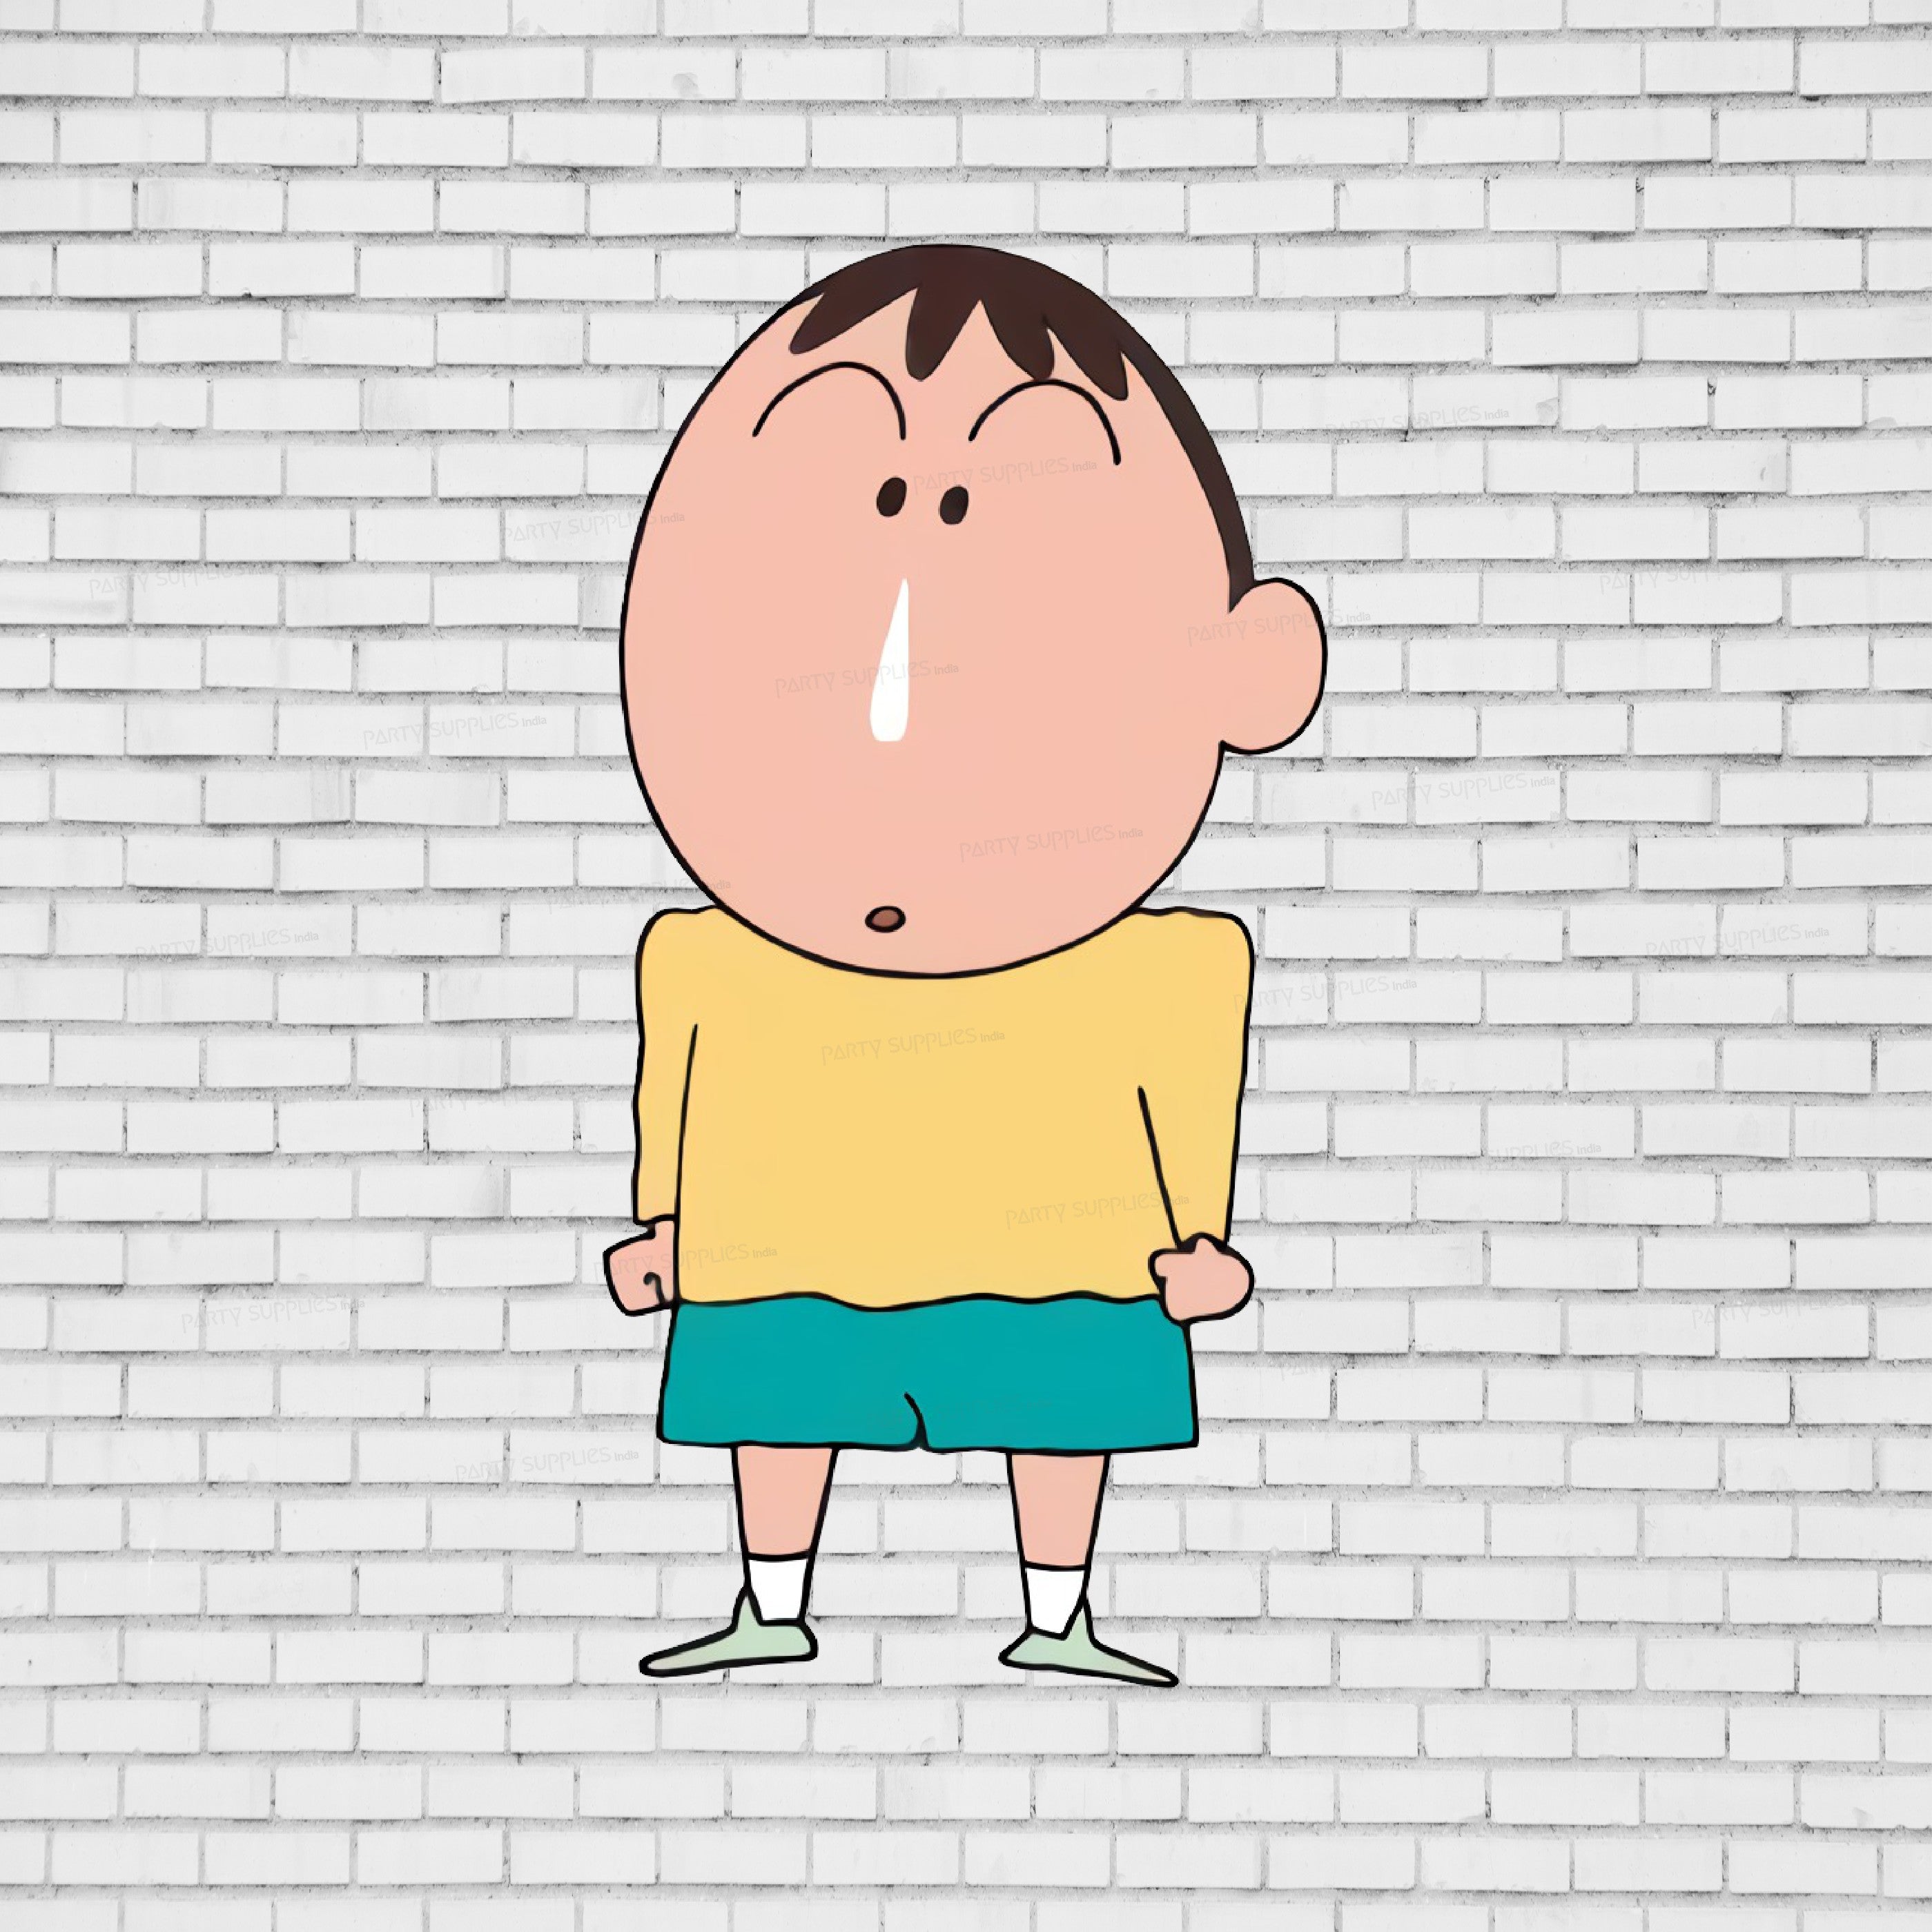 My favourite cartoon crayon shinchan” | by Aishu Hema | Medium